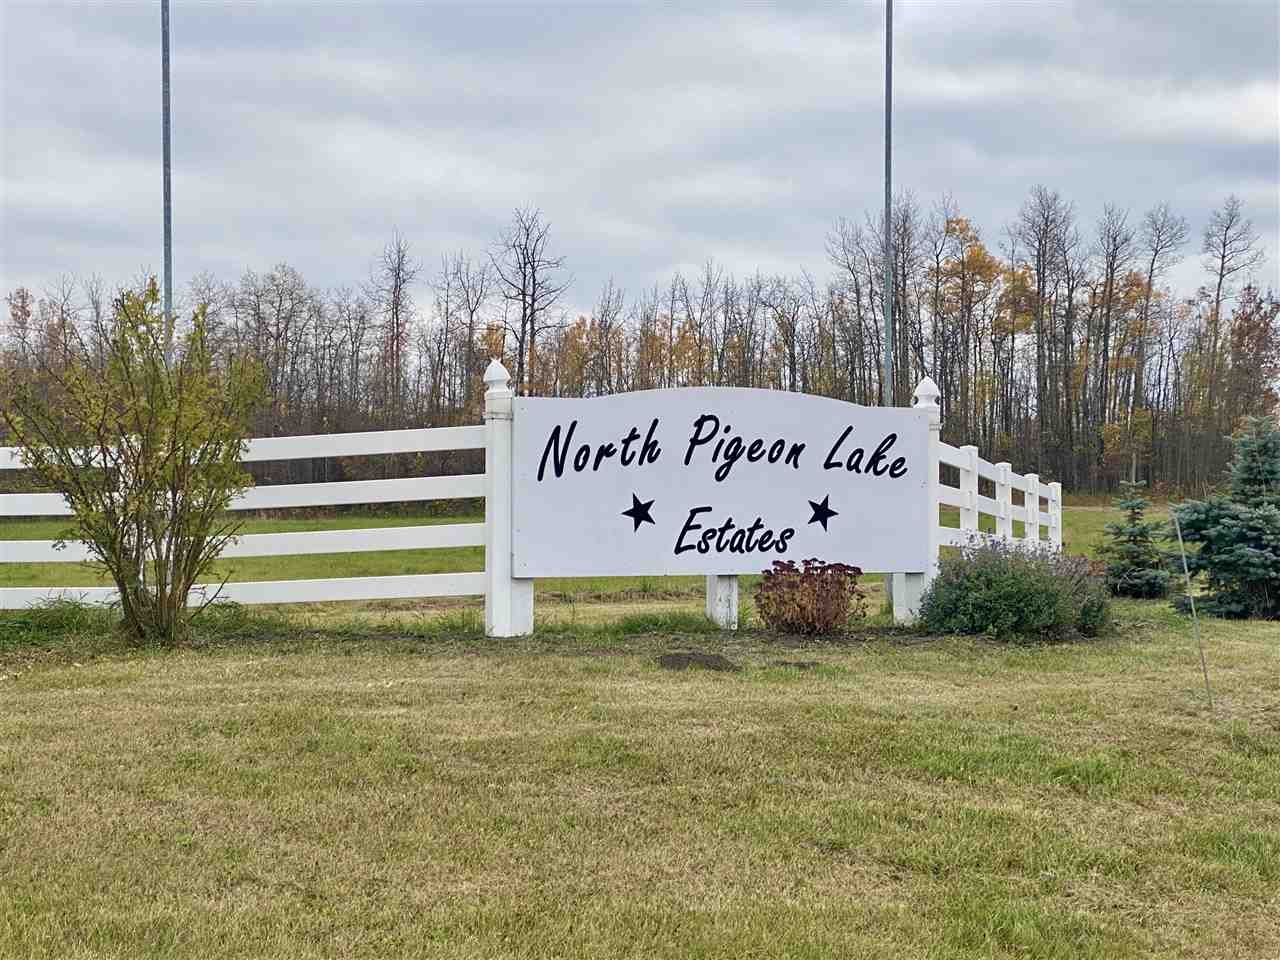 Main Photo: #9 North Pigeon Lake Estates: Rural Wetaskiwin County Rural Land/Vacant Lot for sale : MLS®# E4265016